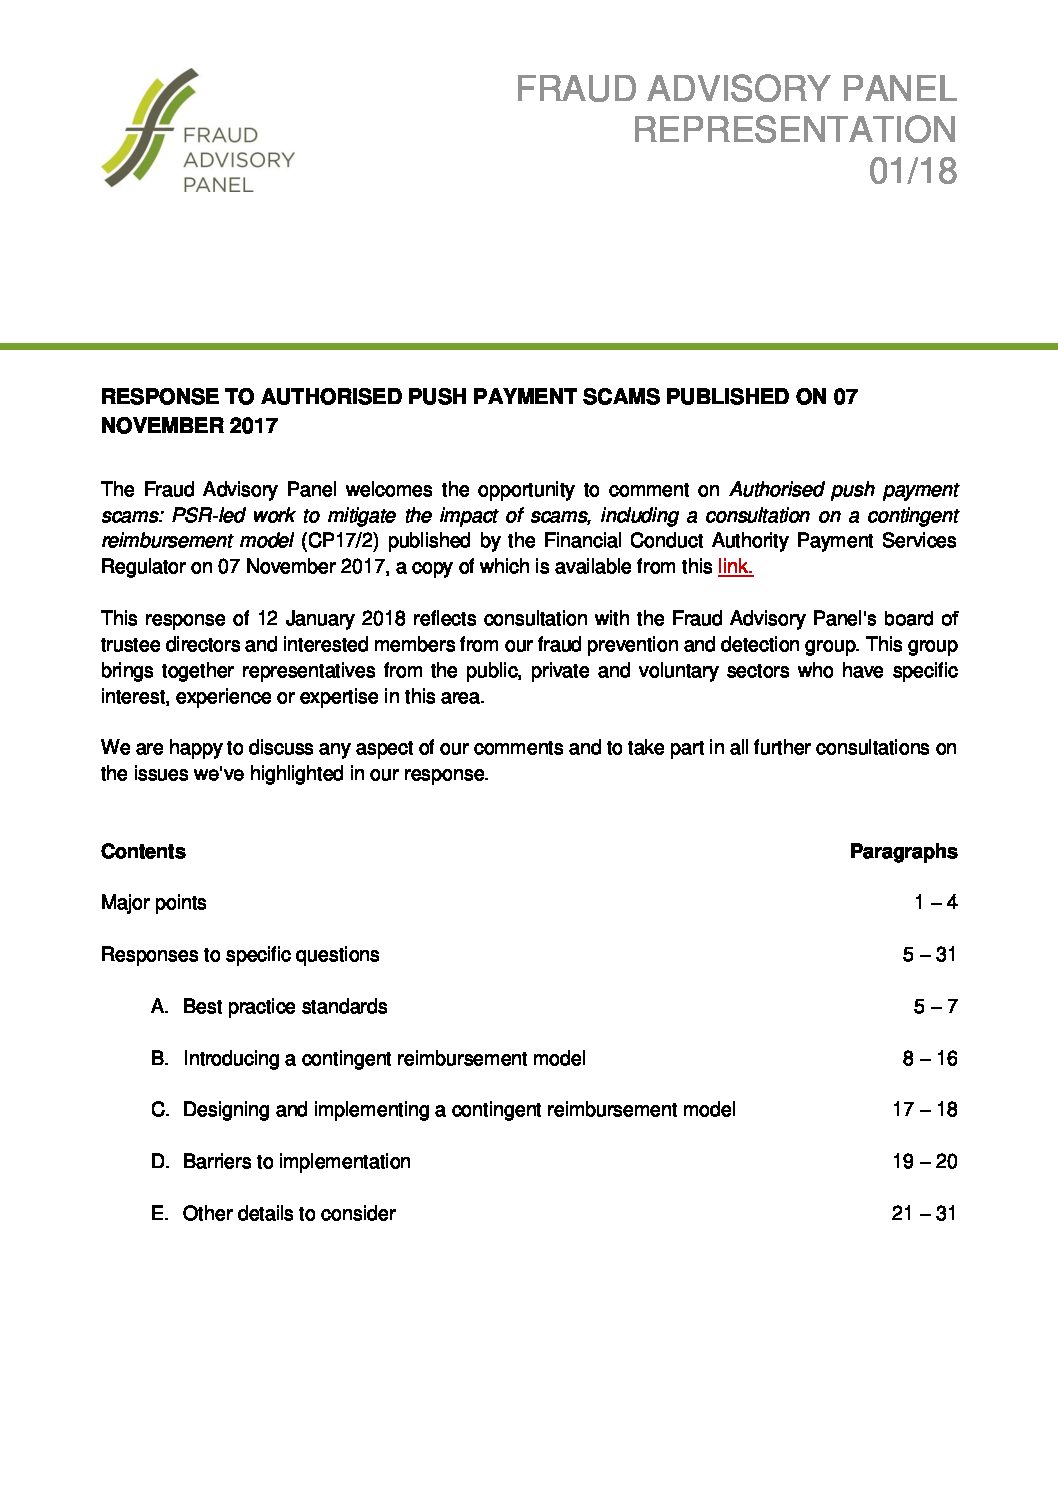 FAP Response to PSR APP Fraud (Final) 12Jan18 document cover